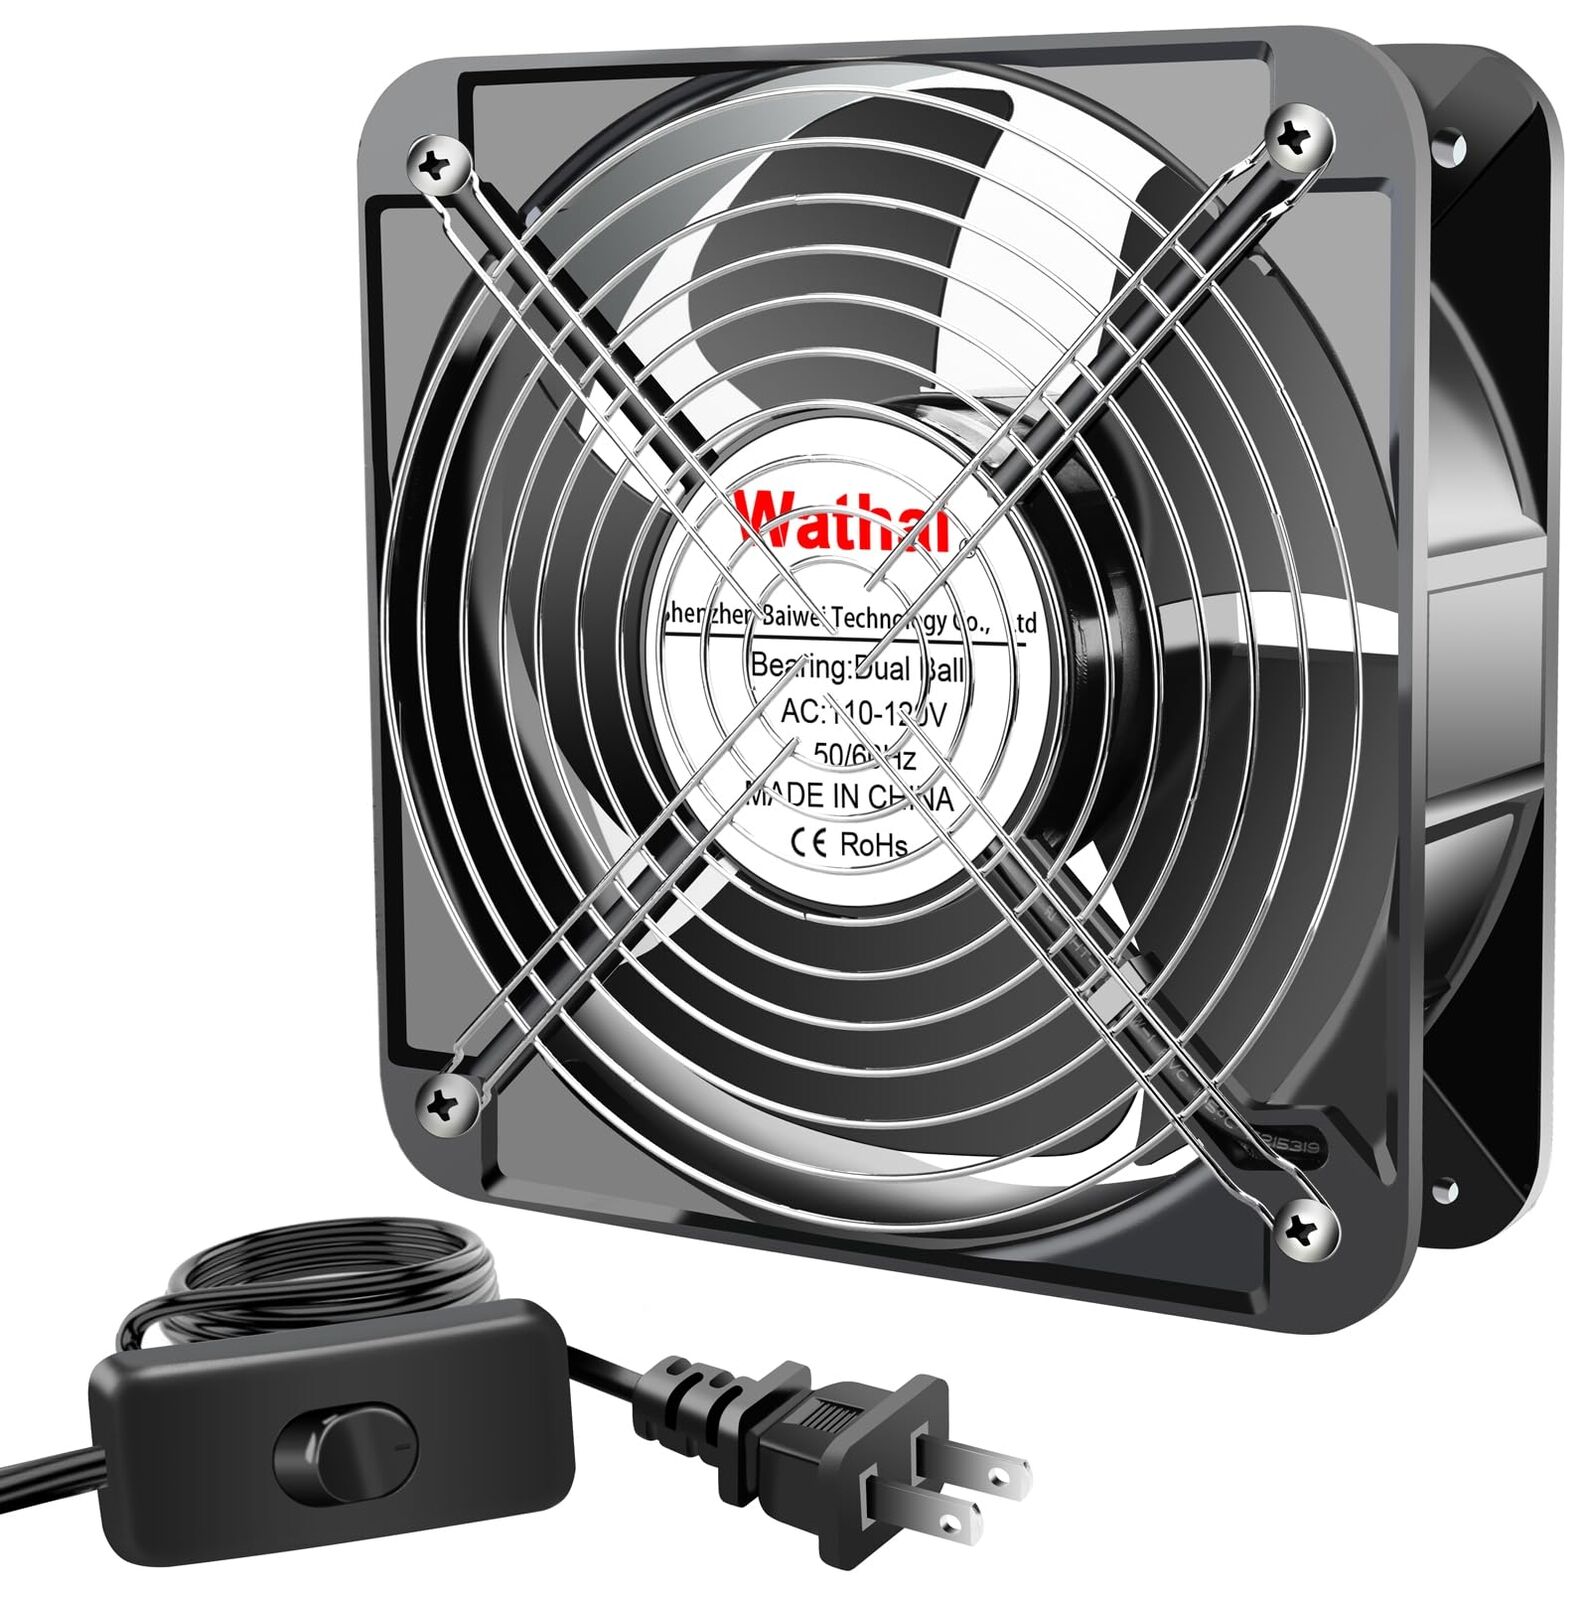 Wathai AC 2060 200mm Case Fan 110v 120V Dual Ball High Performance Industrial...